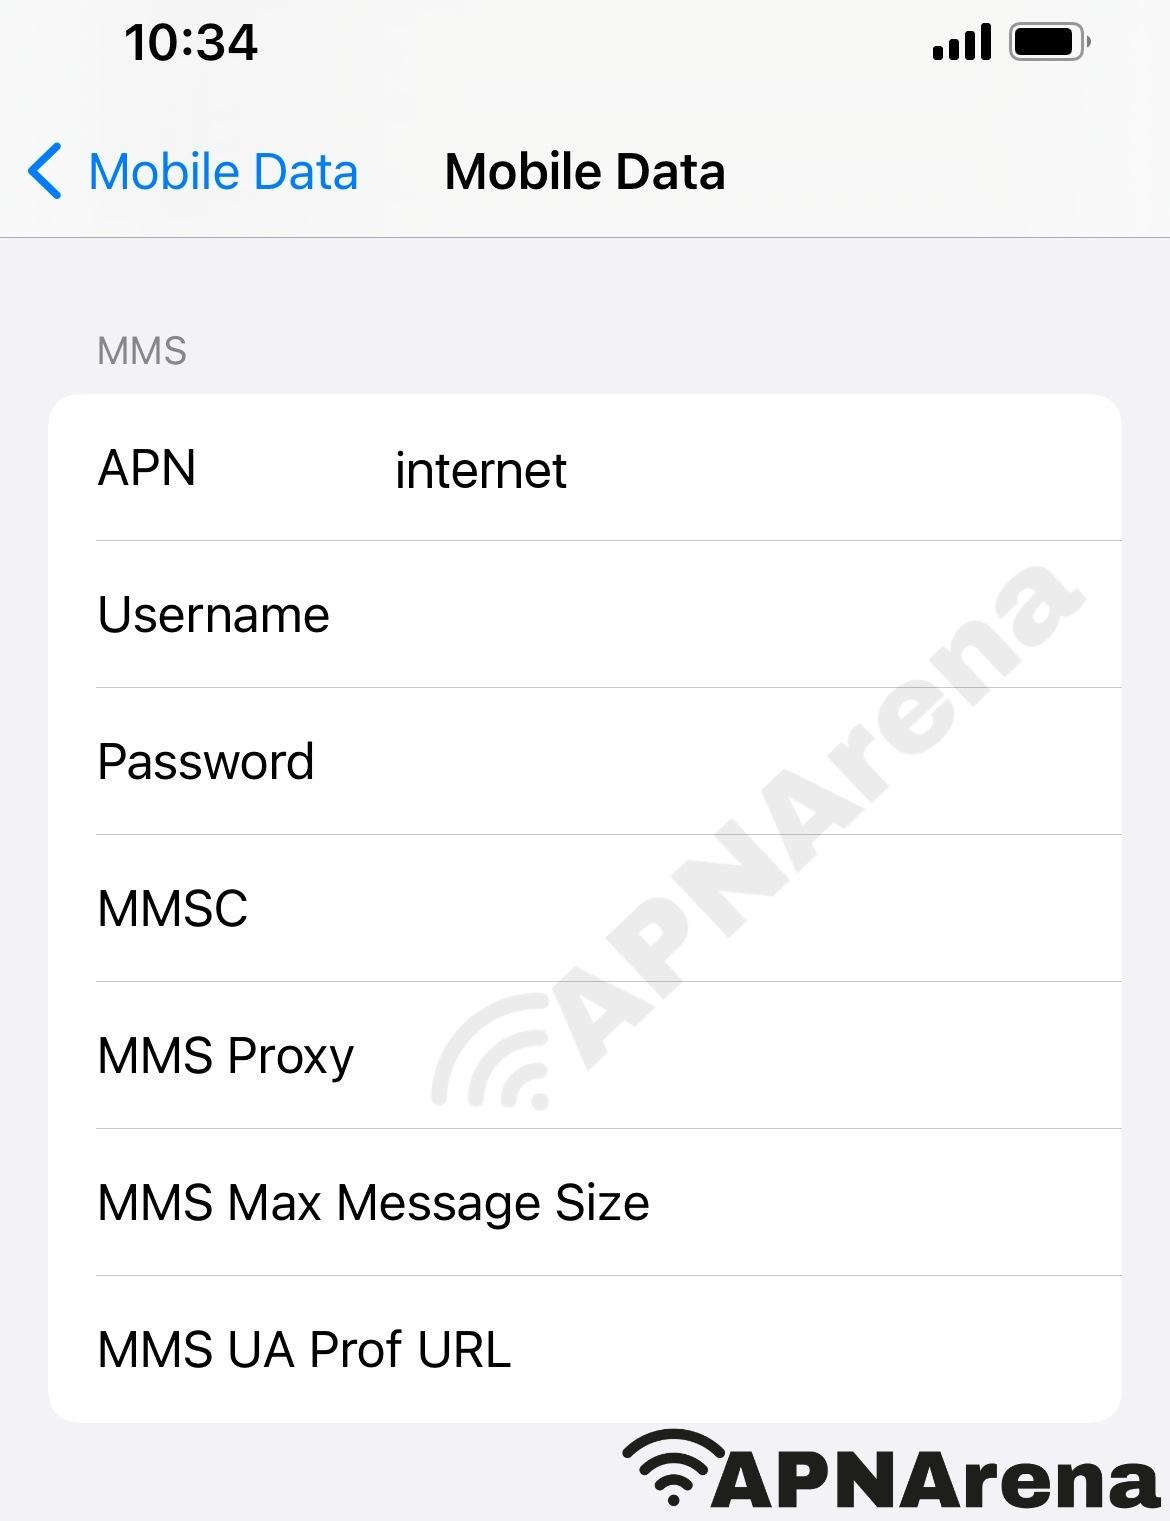 Seawolf Wireless MMS Settings for iPhone